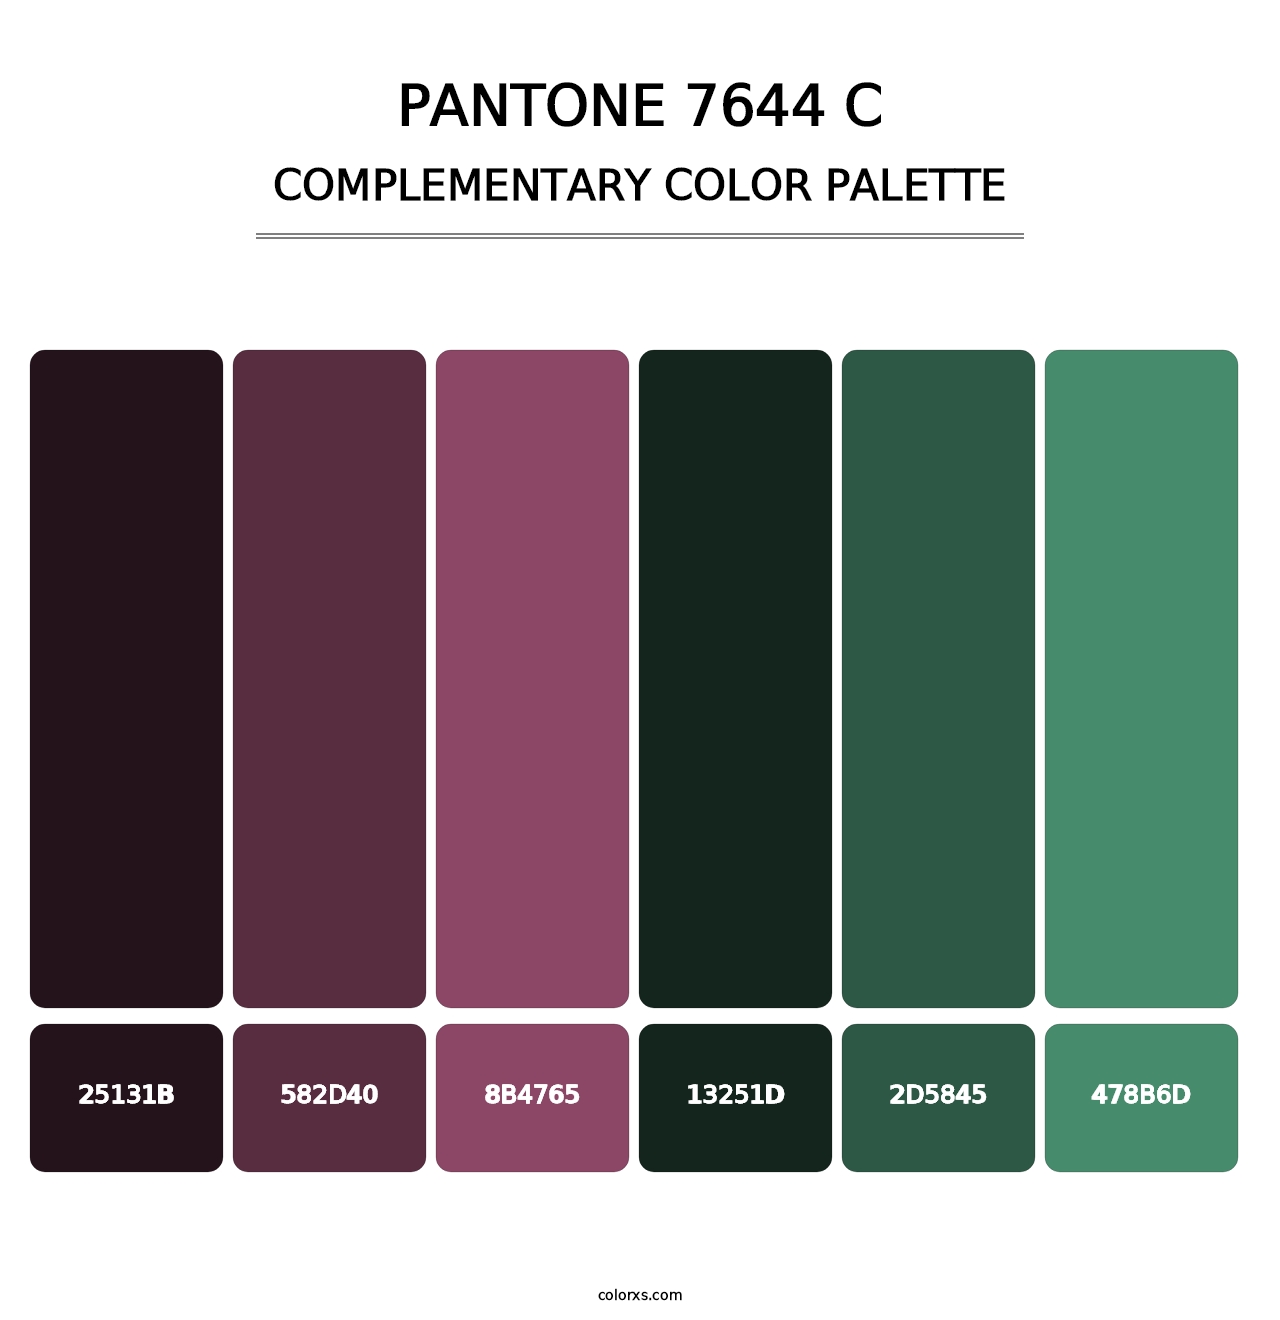 PANTONE 7644 C - Complementary Color Palette